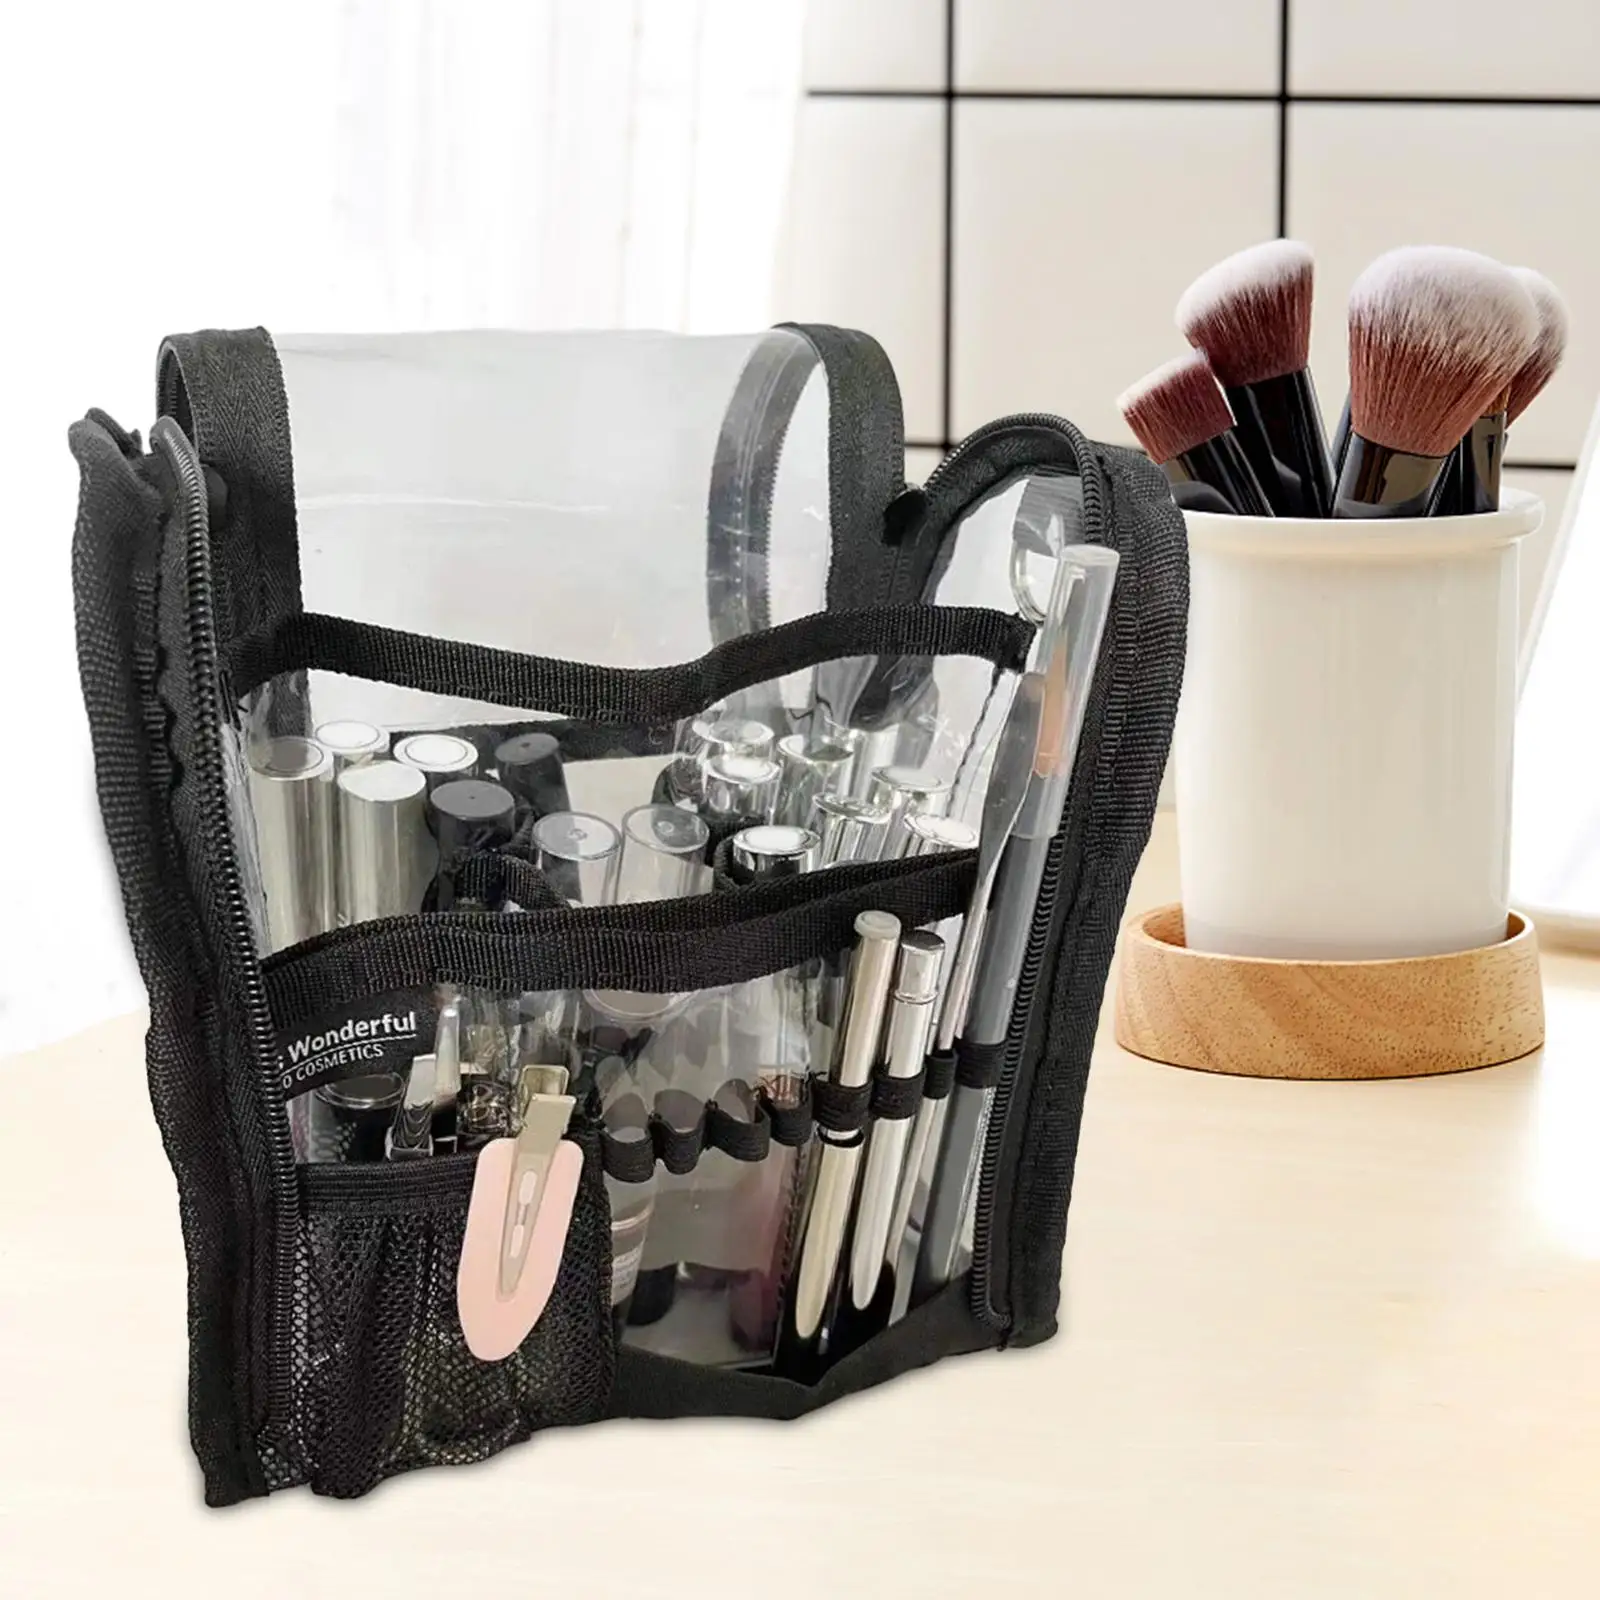 Makeup Artists Bag Make Up Bags Organizer Multipurpose Large Clear Makeup Bag Toiletries Makeup Case for Camping Home